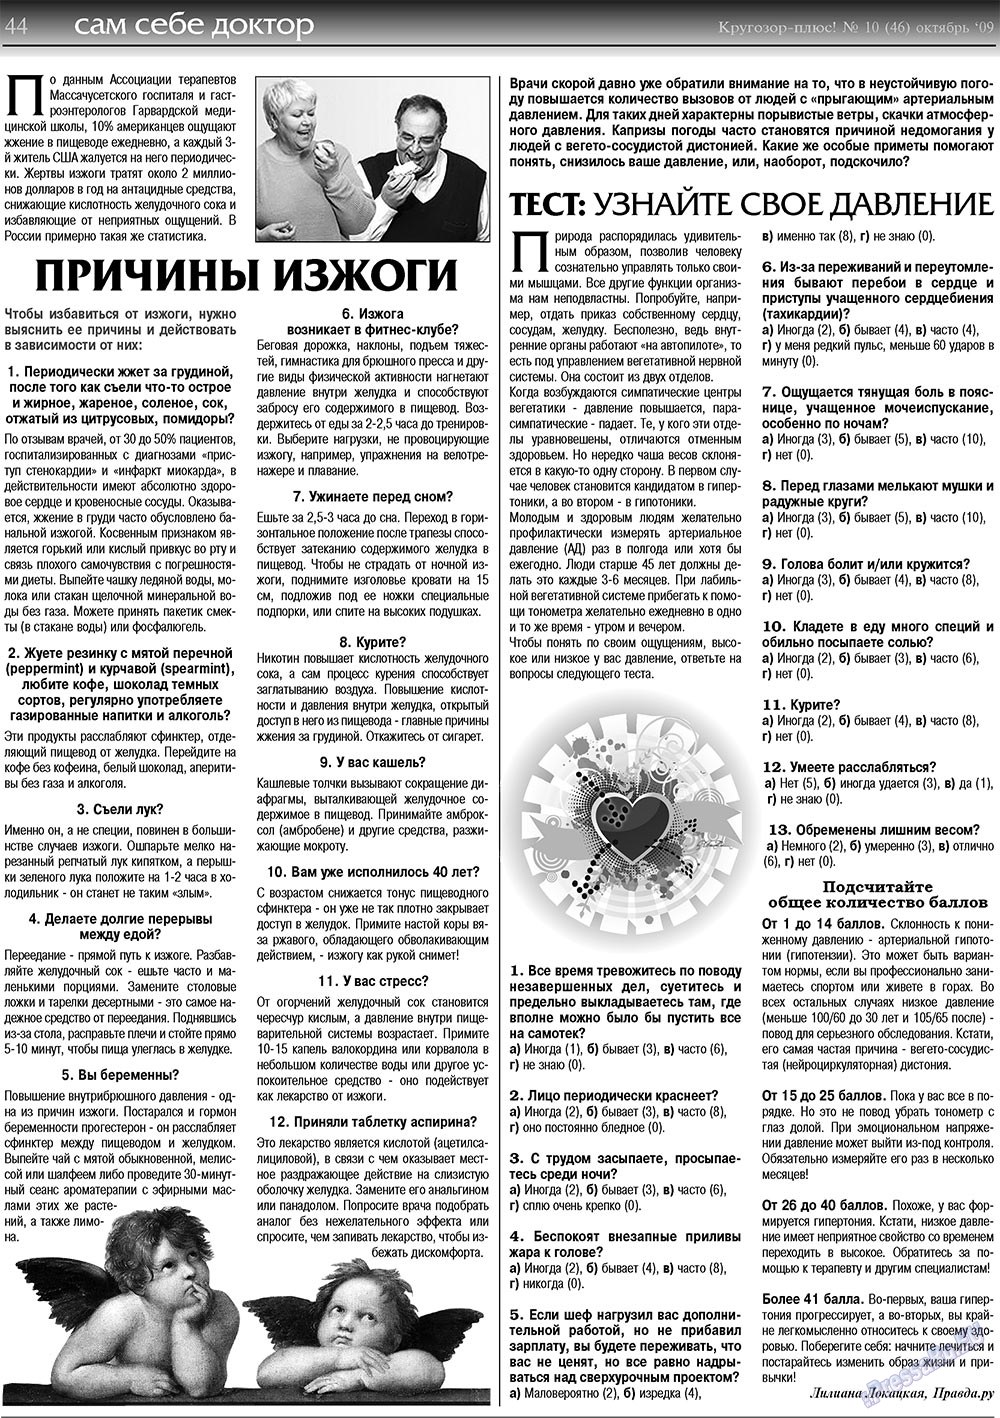 Кругозор плюс! (газета). 2009 год, номер 10, стр. 44